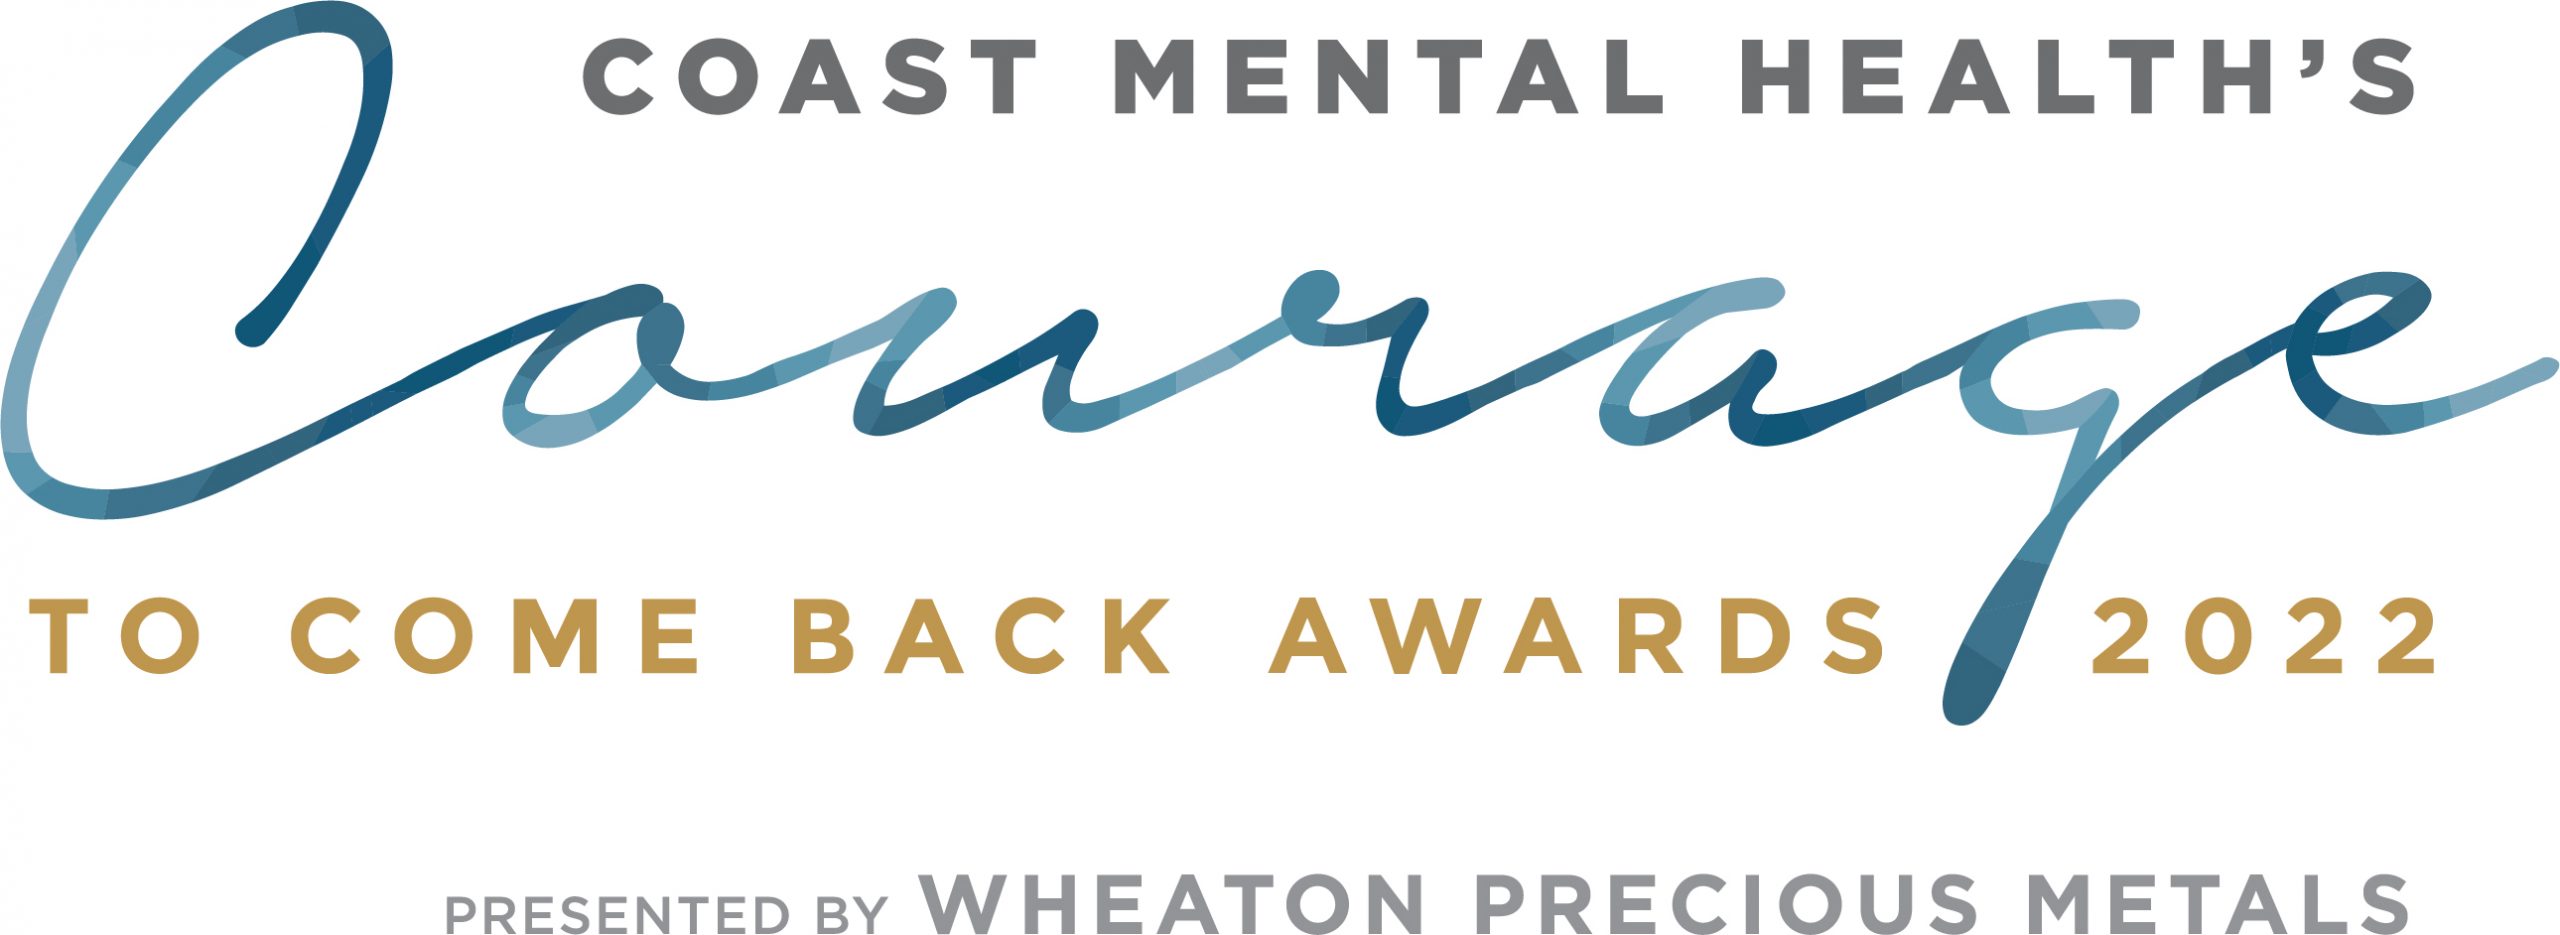 Courage To Come Back Awards 2022 logo 